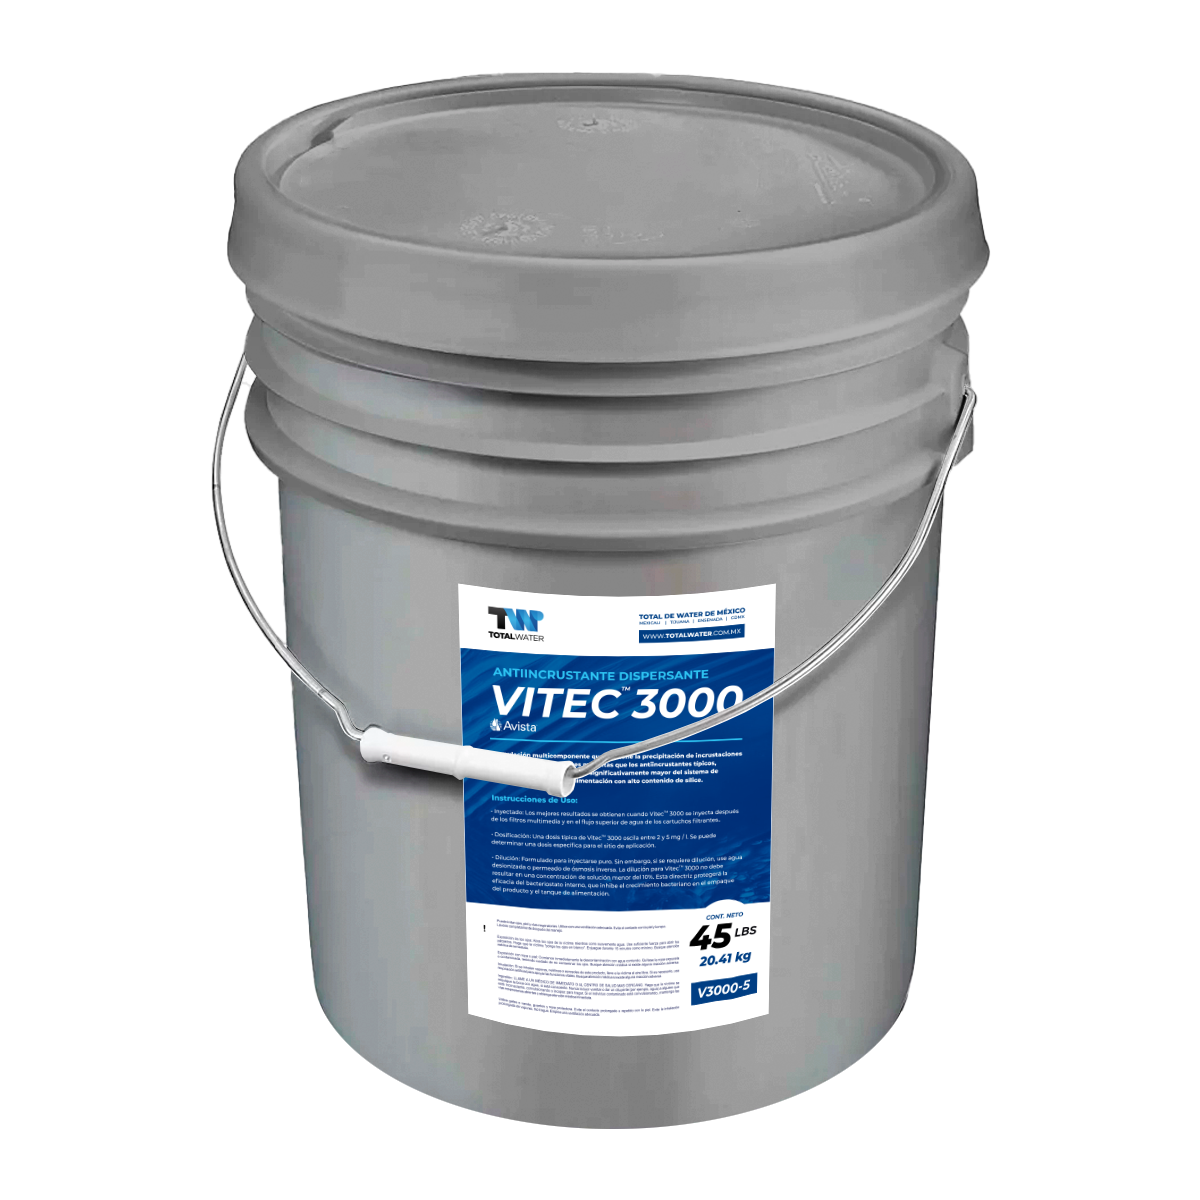 Anti-incrustante Dispersante - Vitec 3000 - 45 lbs (20.41 kg) - AVISTA